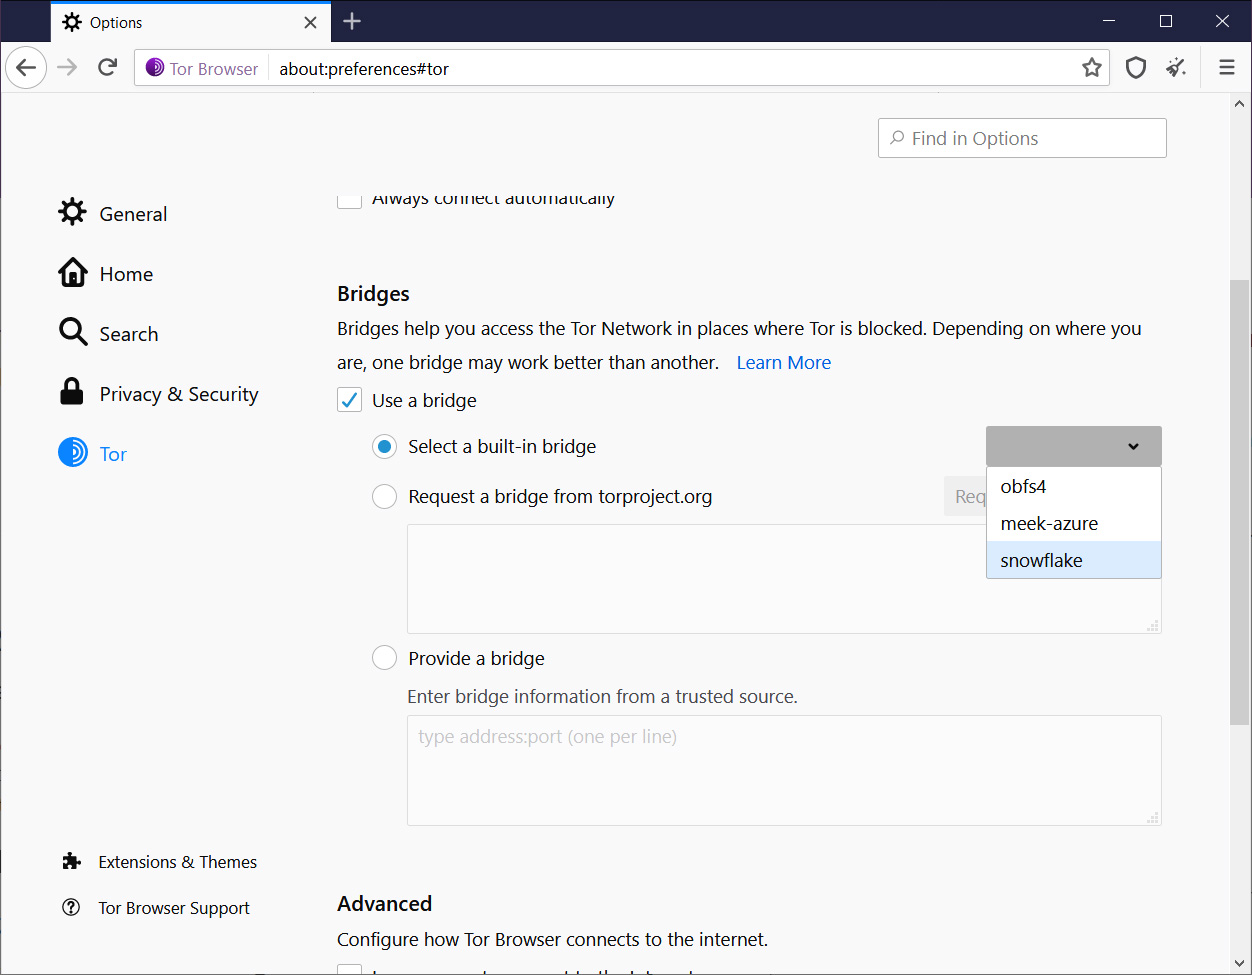 Tor Browser 10.5 adds Snowflake as a bridge option